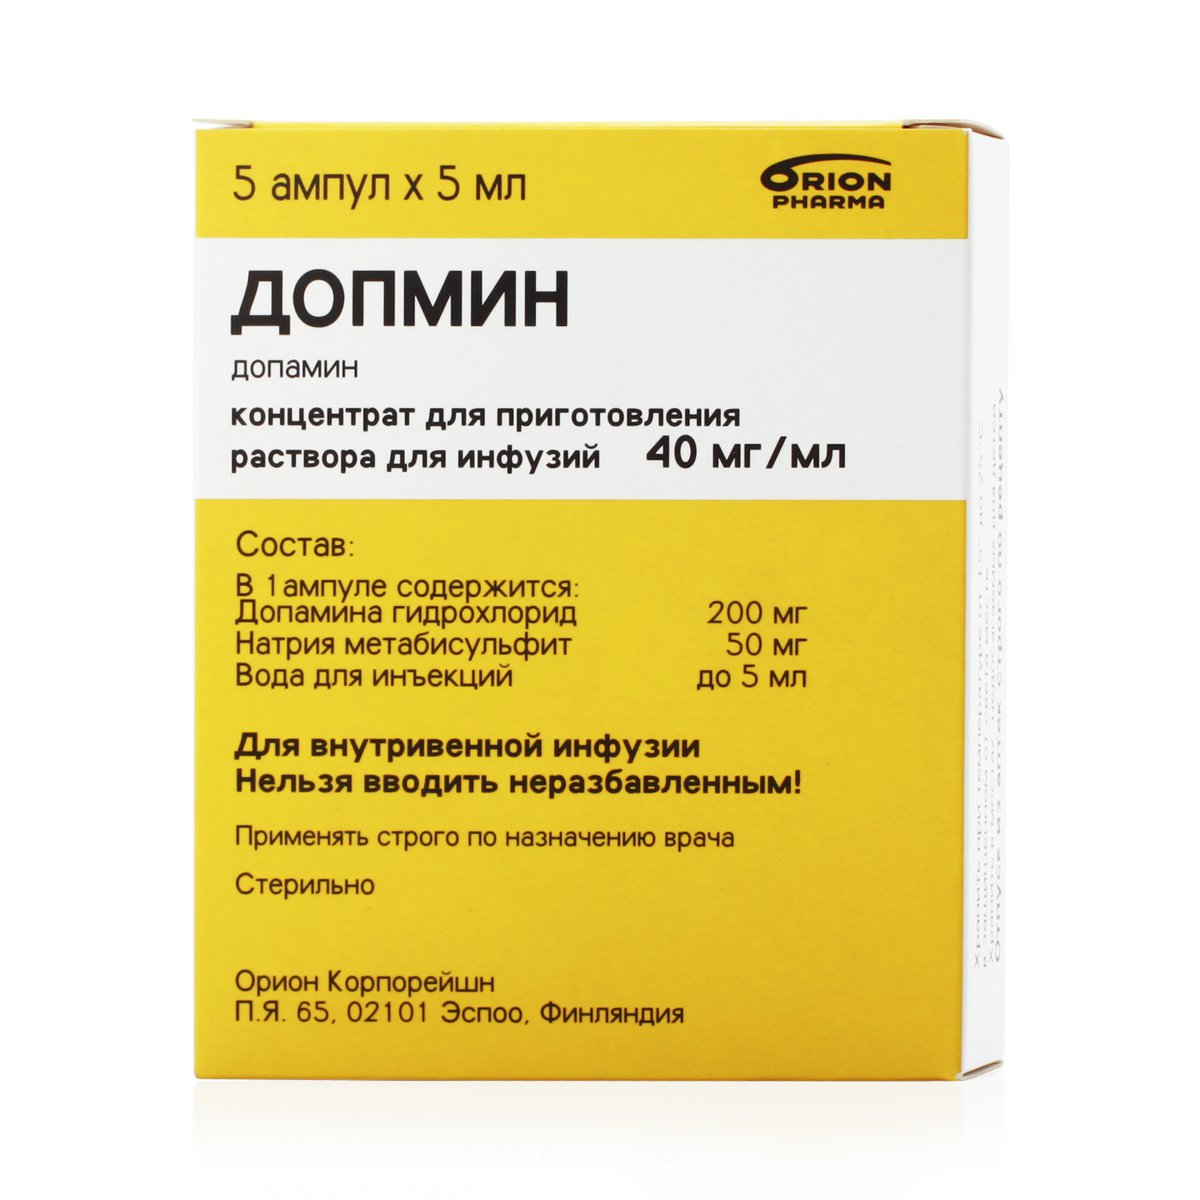 Допамин концентрат. Допамин 5 мг/мл. Допамин раствор. Допамин концентрат для приготовления раствора для инфузий. Допамин ампулы.